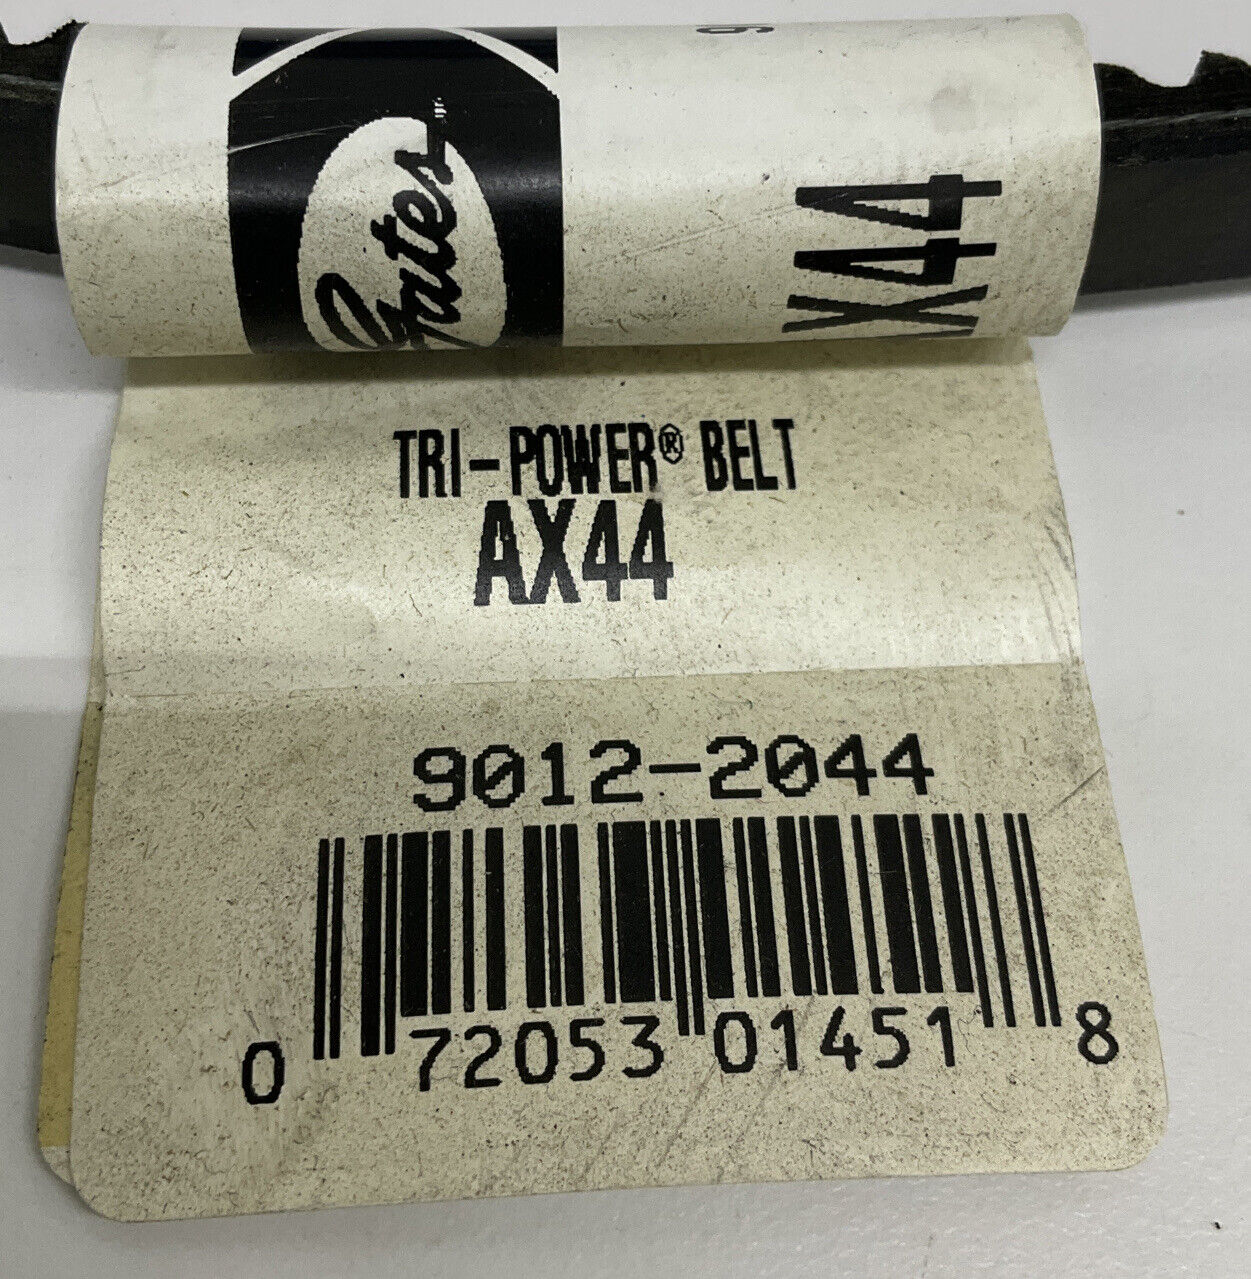 Gates AX 44 / 9012-2044 Tri-Power Belt Cogged V-Belt (BE121) - 0